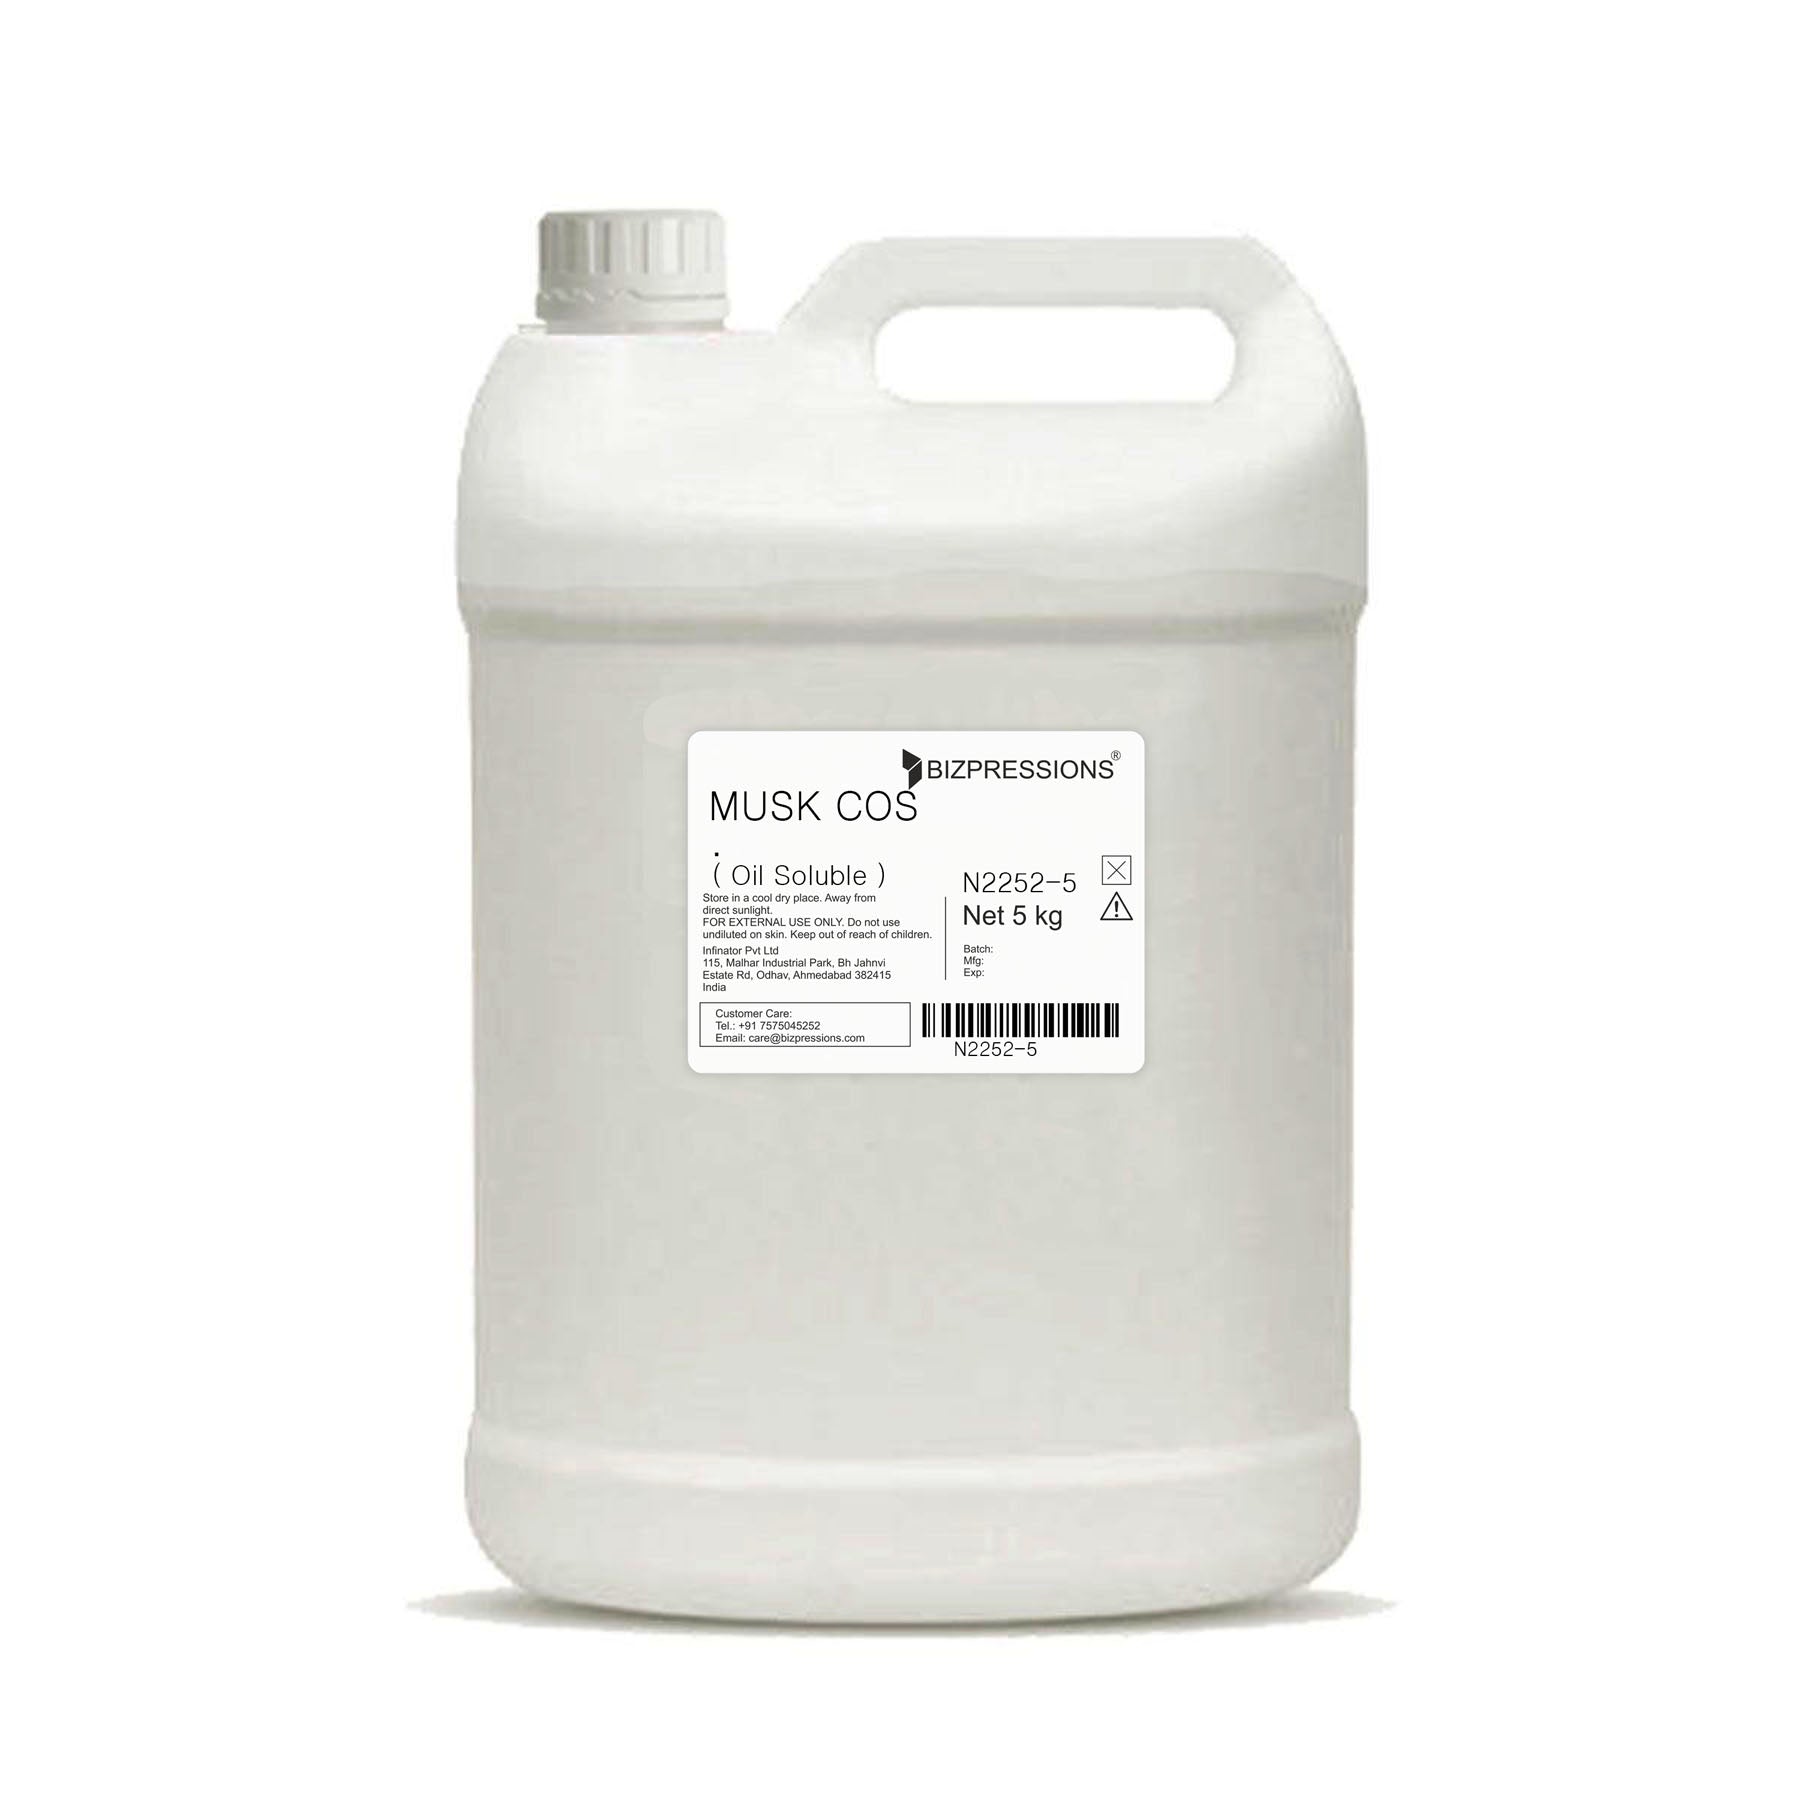 MUSK COS - Fragrance ( Oil Soluble ) - 5 kg